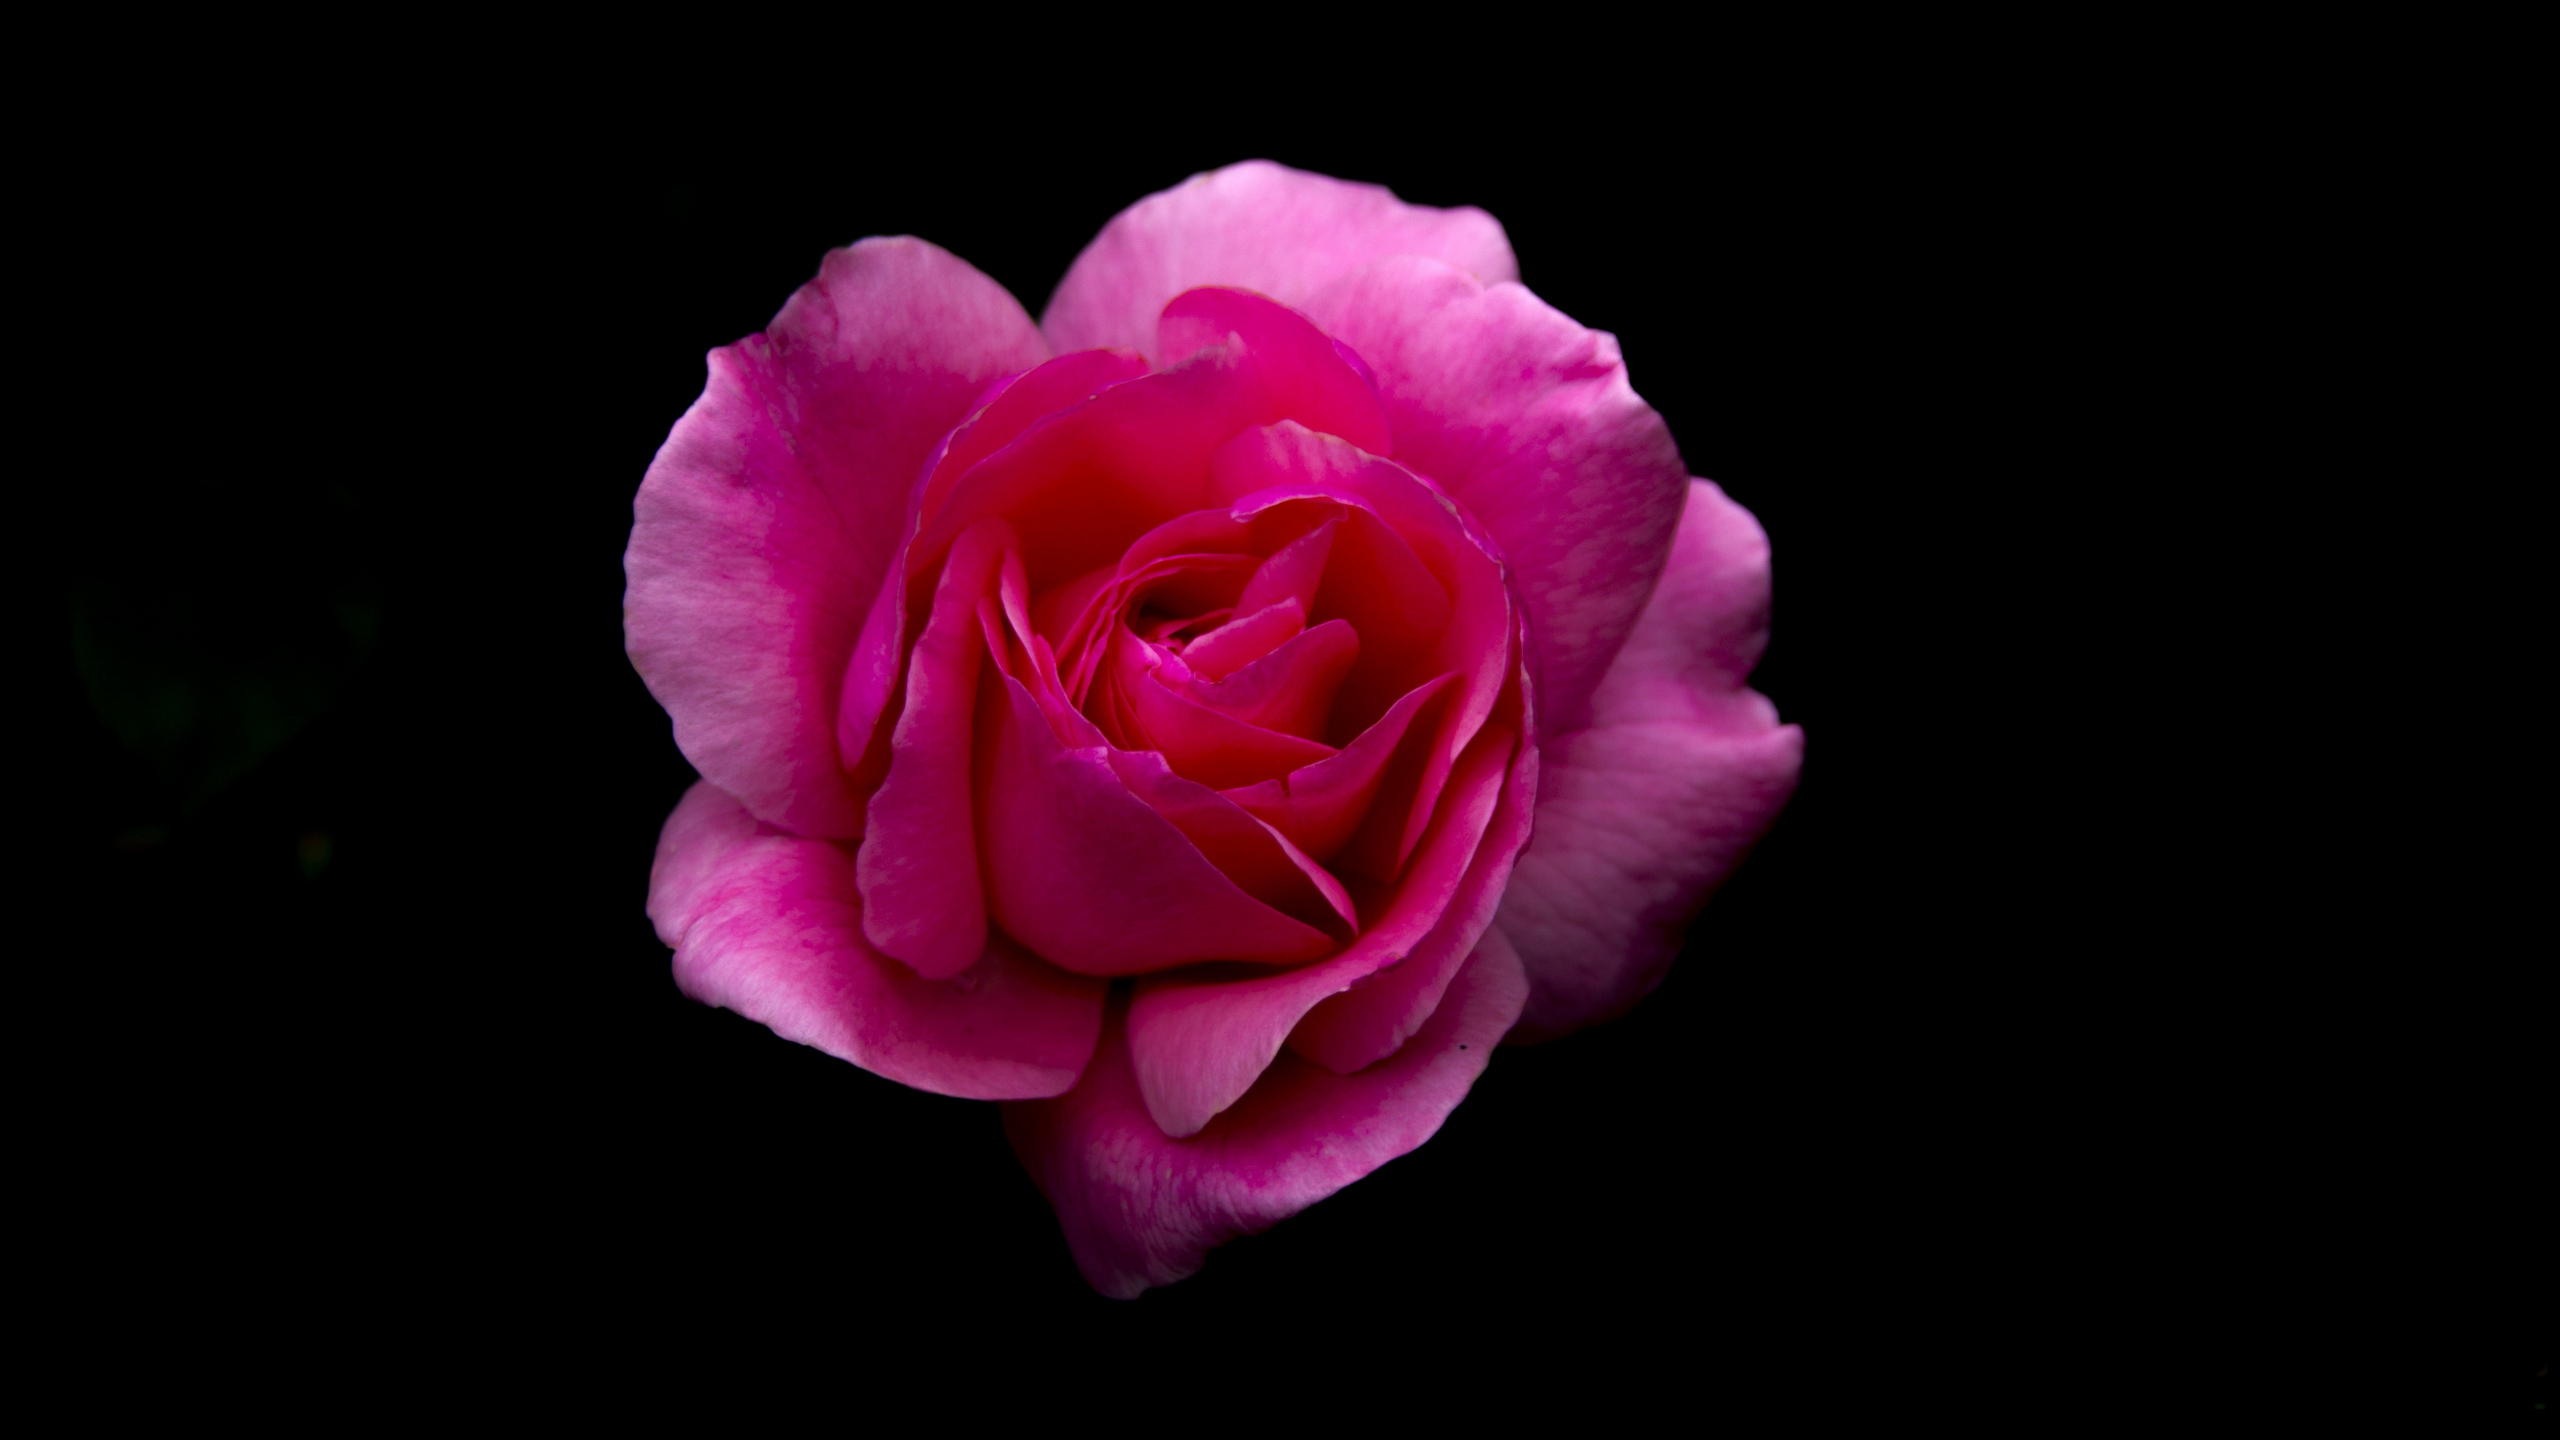 Download wallpaper 2560x1440 rose, pink flower, portrait, dual wide 16:9  2560x1440 hd background, 1377